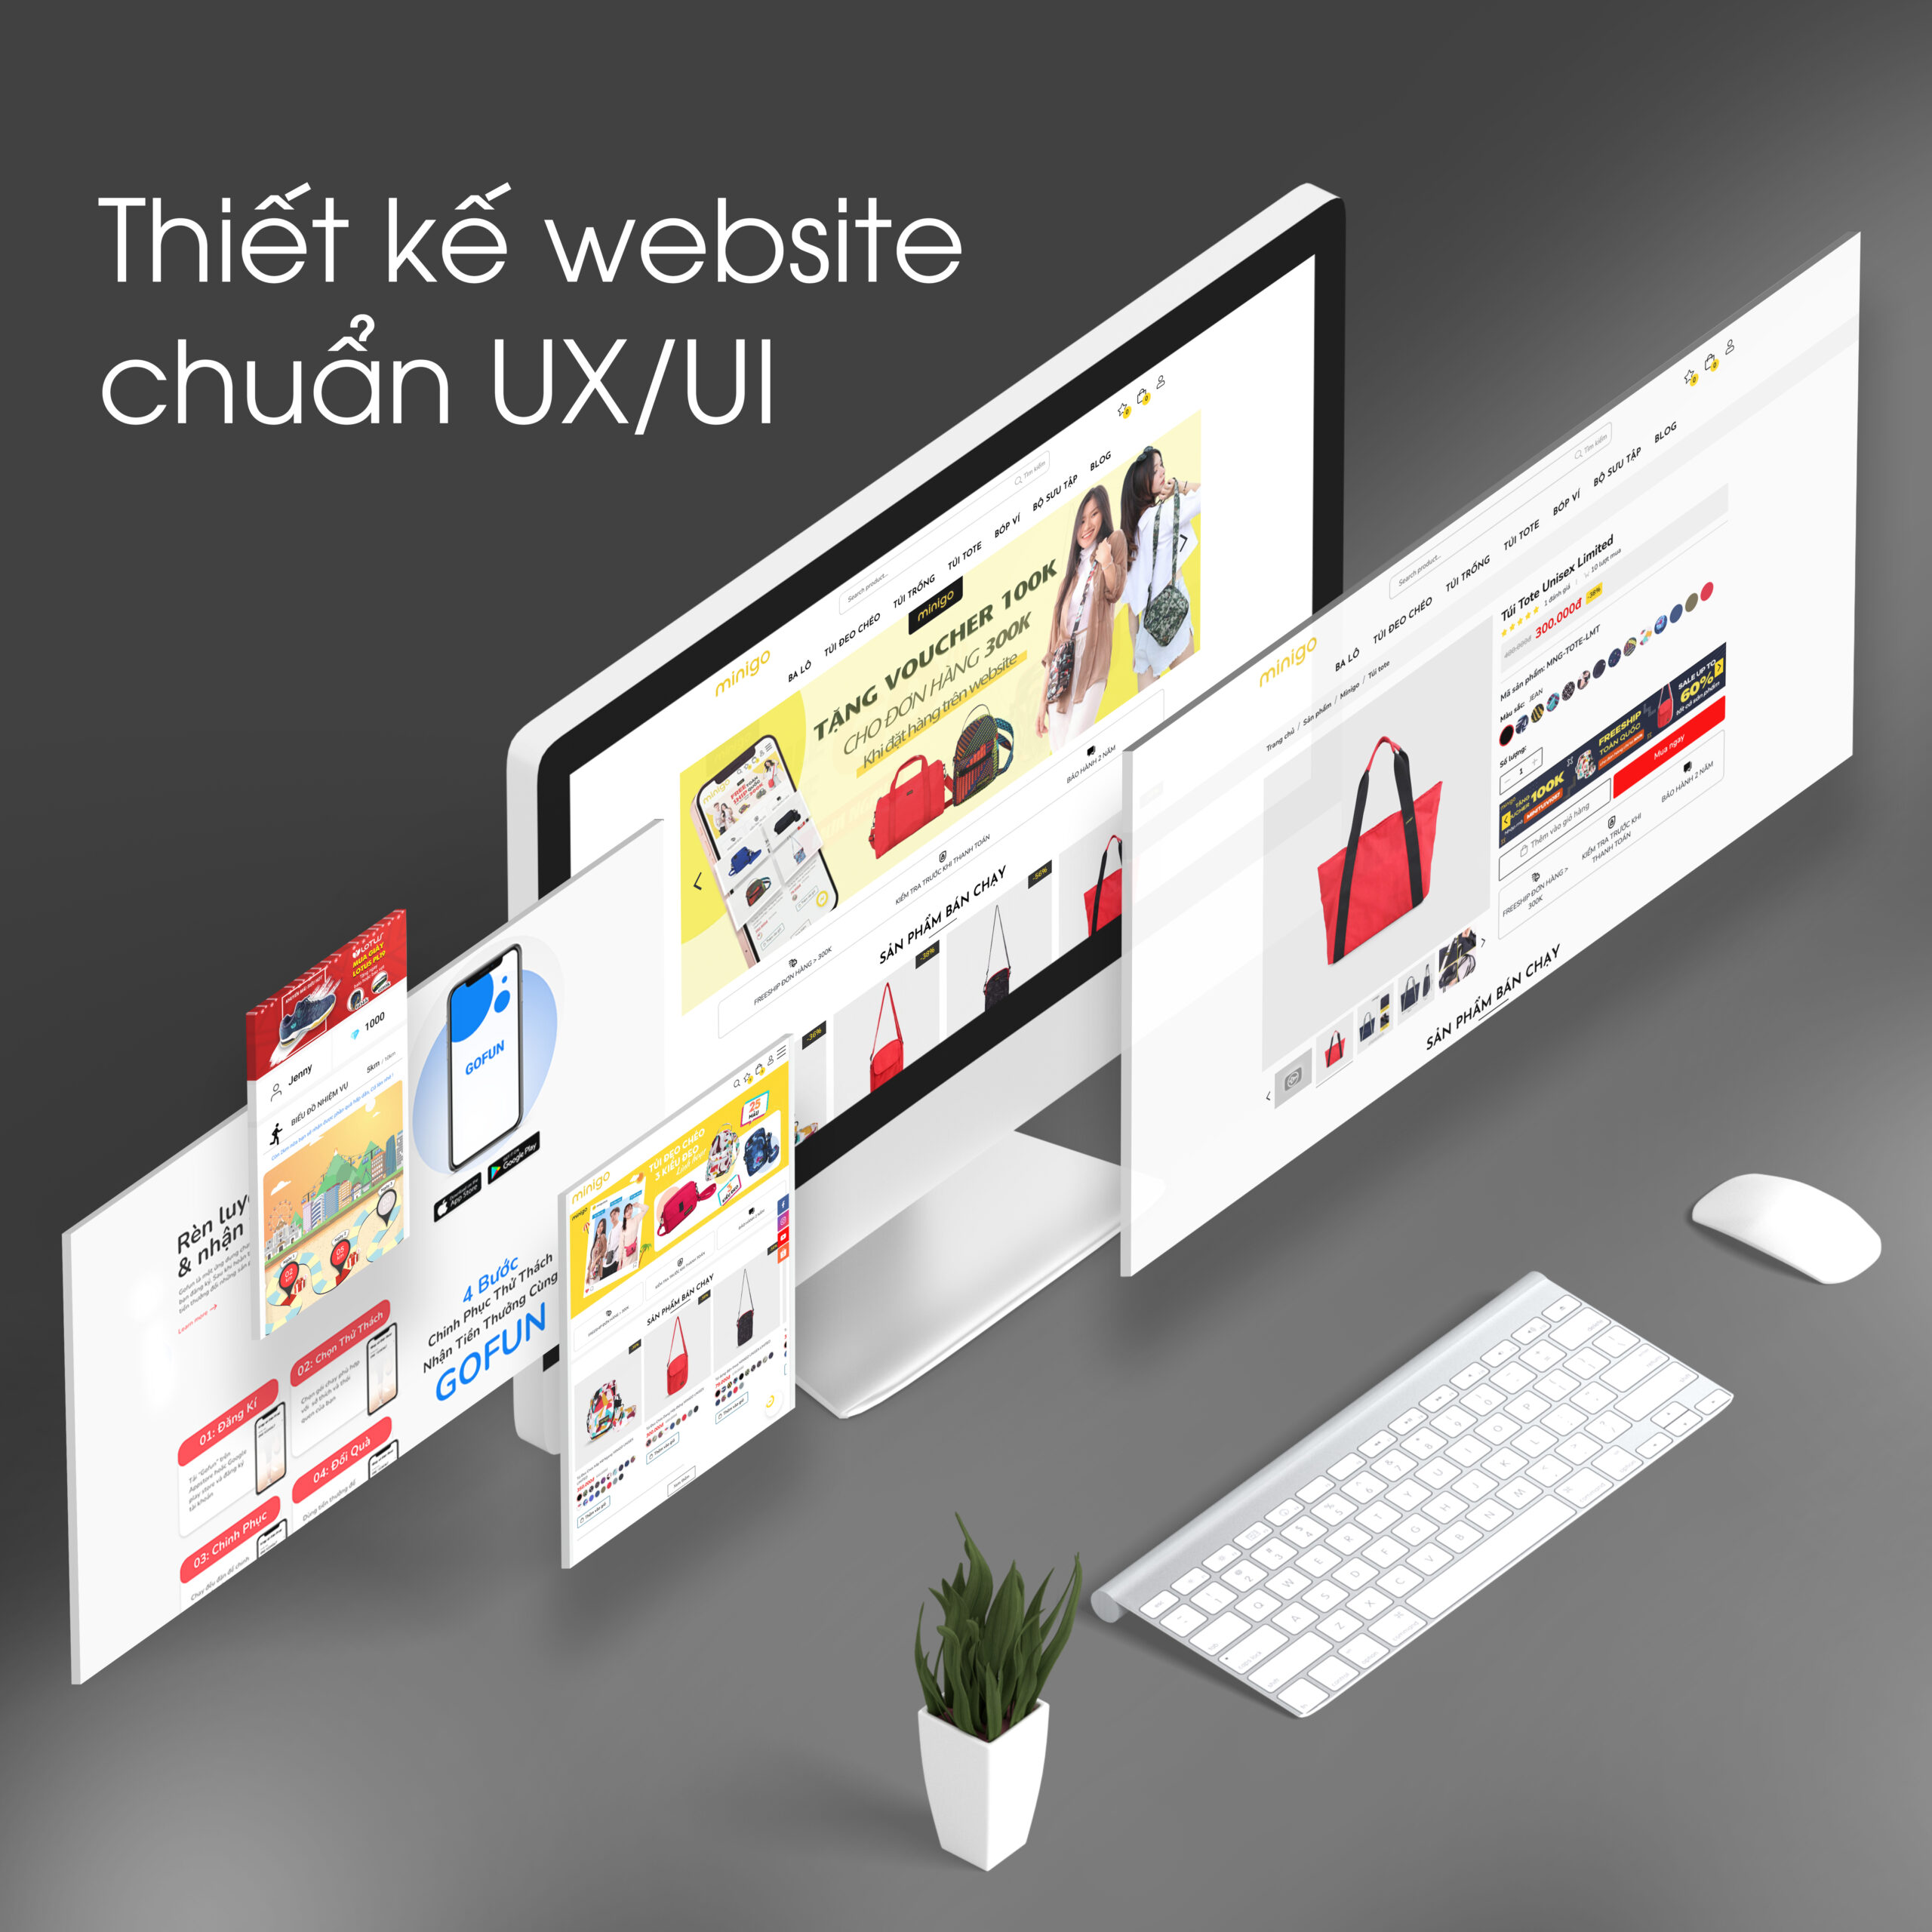 Miko Tech - dịch vụ thiết kế website chuẩn UX/UI